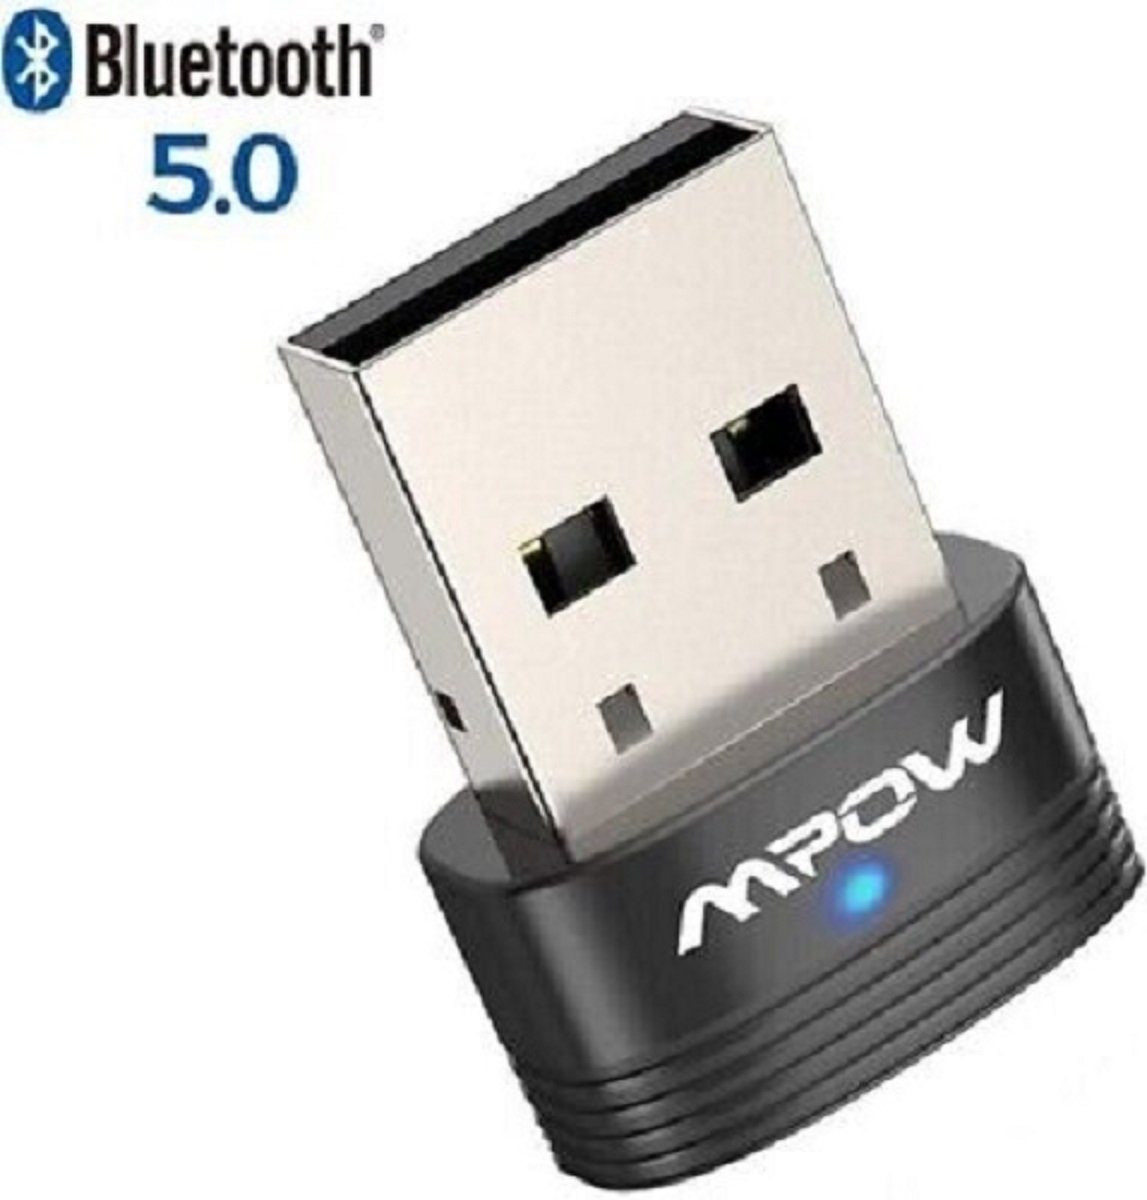 5.0 Sender Empfänger Dongle Bluetooth USB Mpow Bluetooth®-Sender